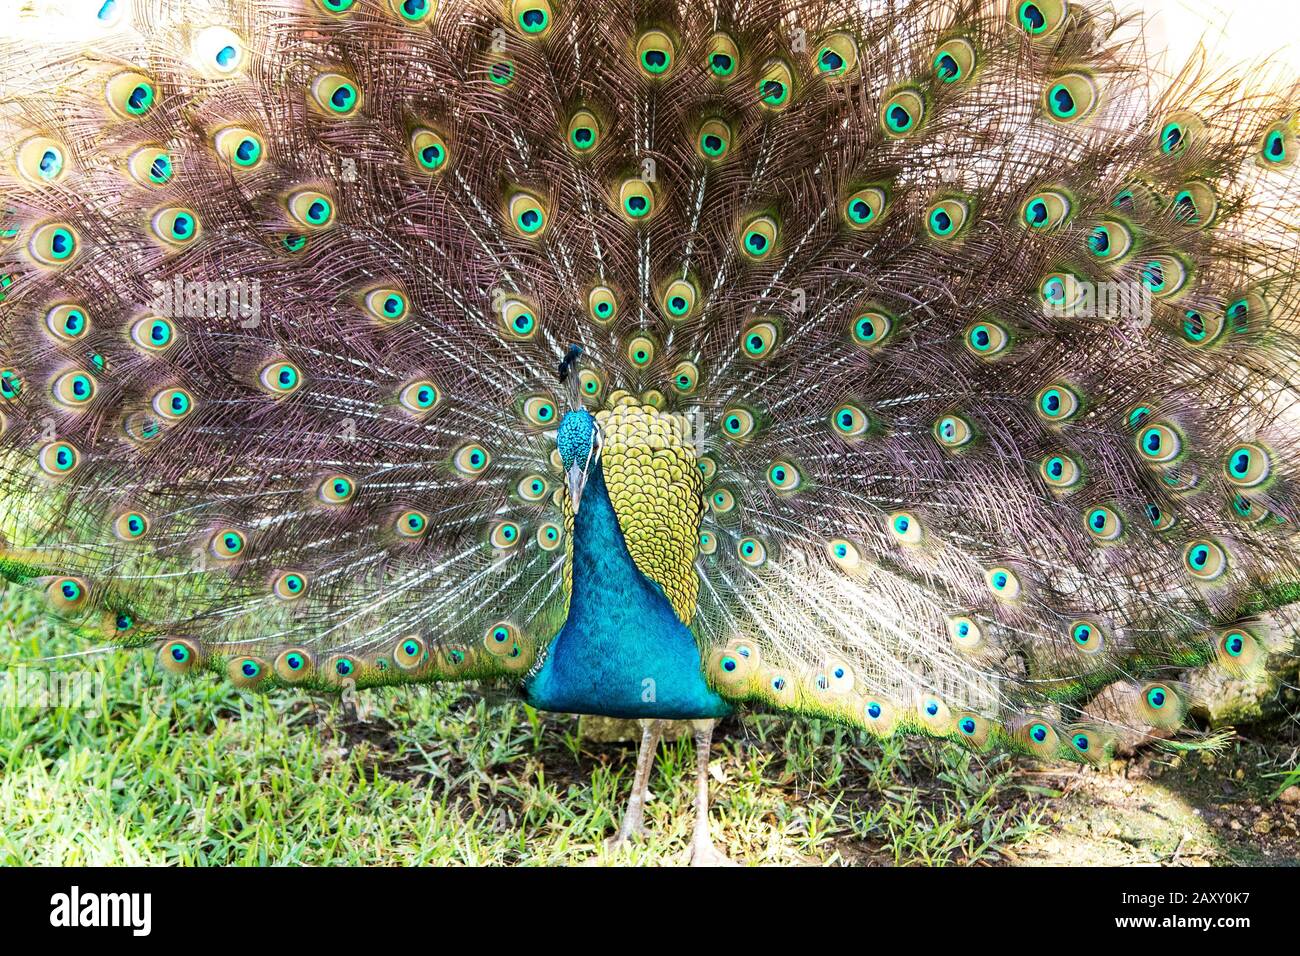 Maschio indiano peacock vagare in un parco giardino. Foto Stock